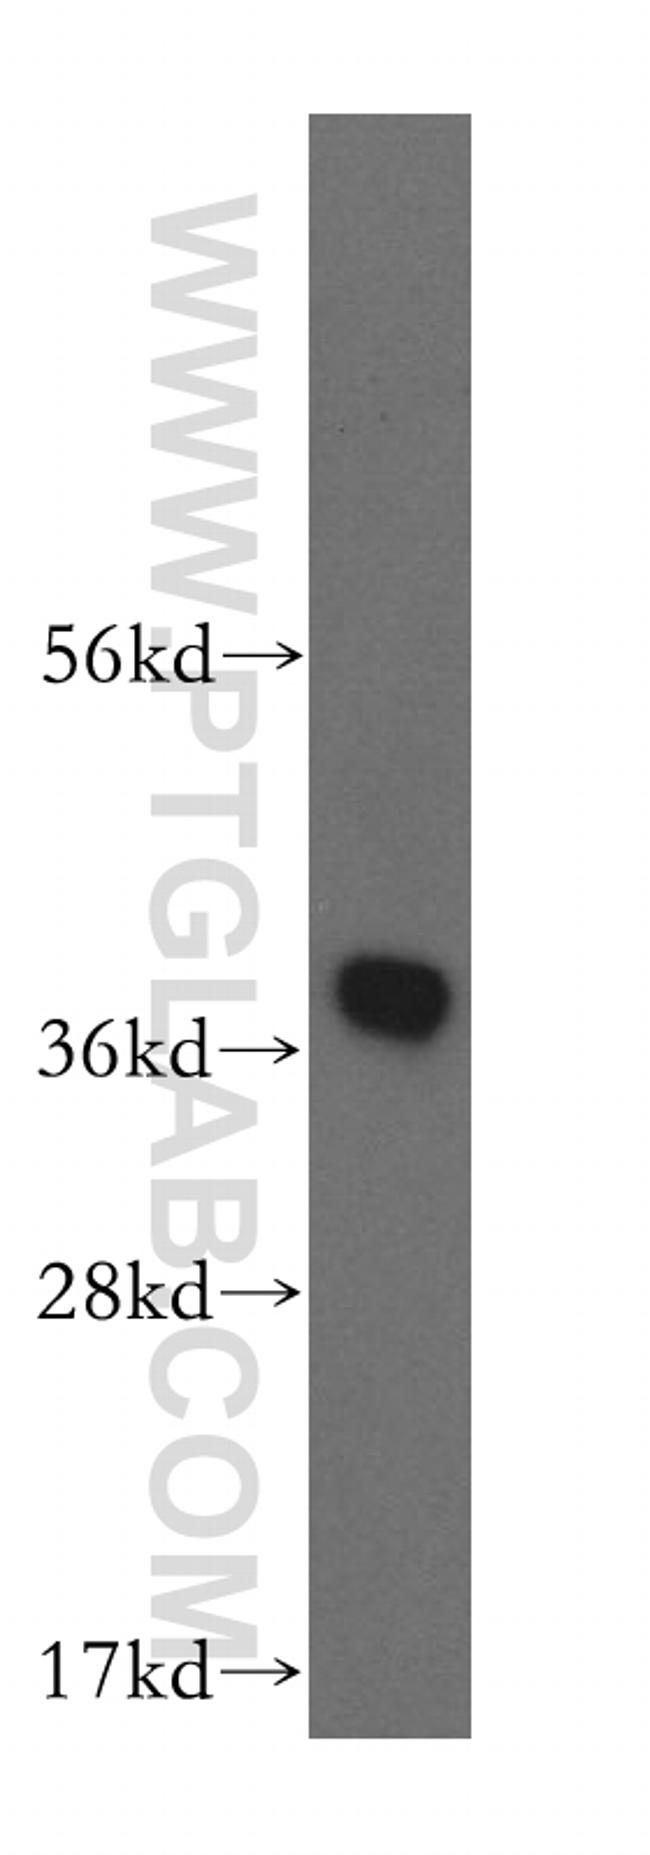 HSD17B7 Antibody in Western Blot (WB)